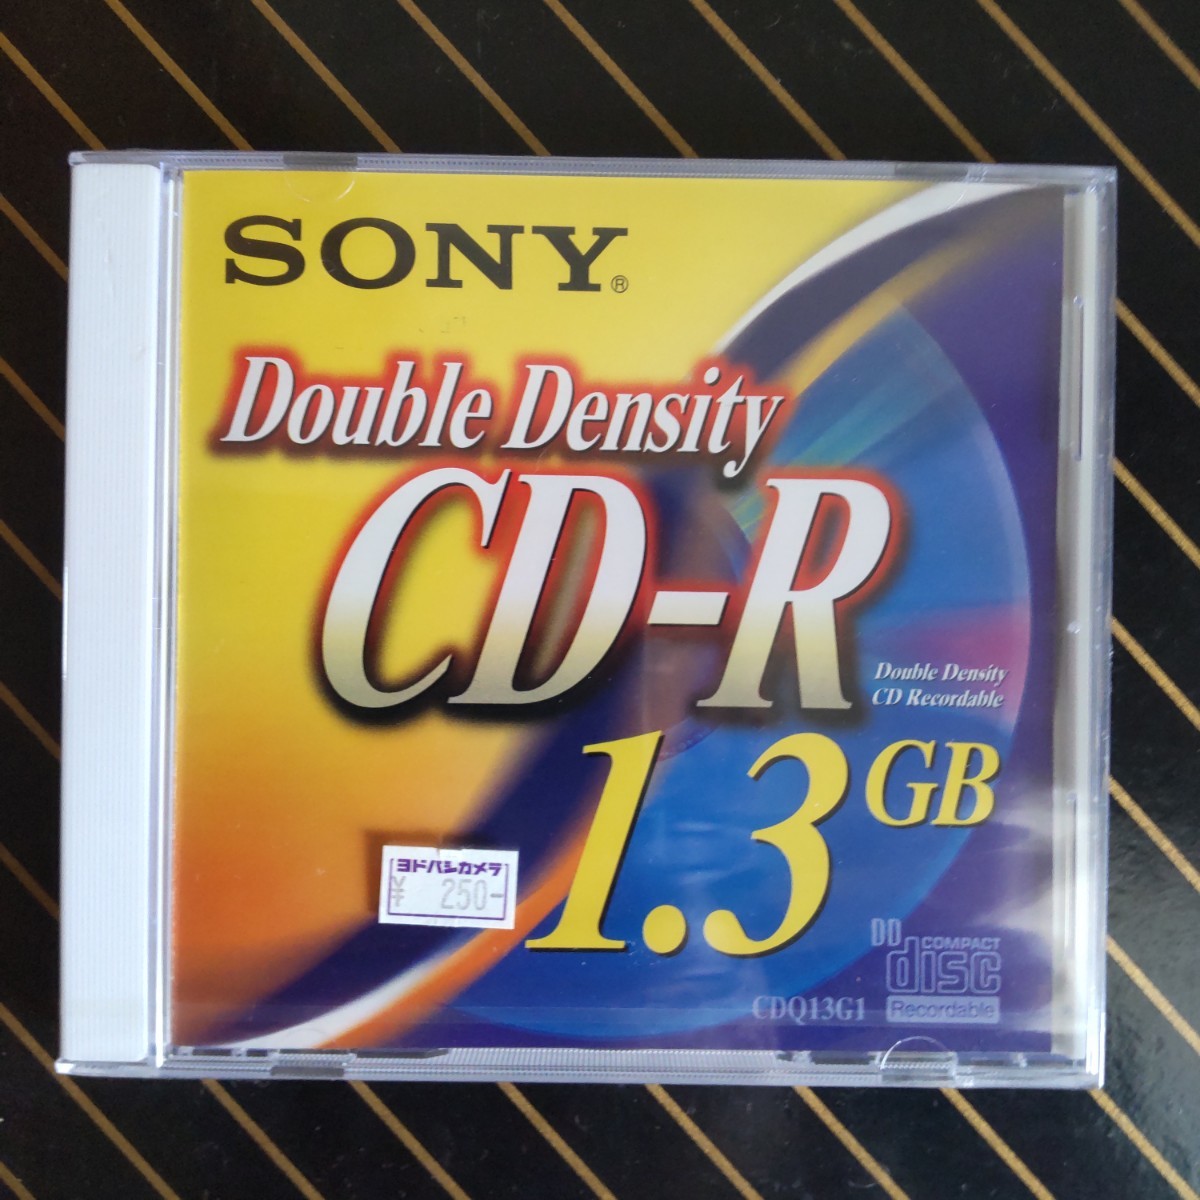 ★☆【未開封】 SONY Double Density CD-R CDQ13G1 DDCD-R 倍密度CD-R☆★